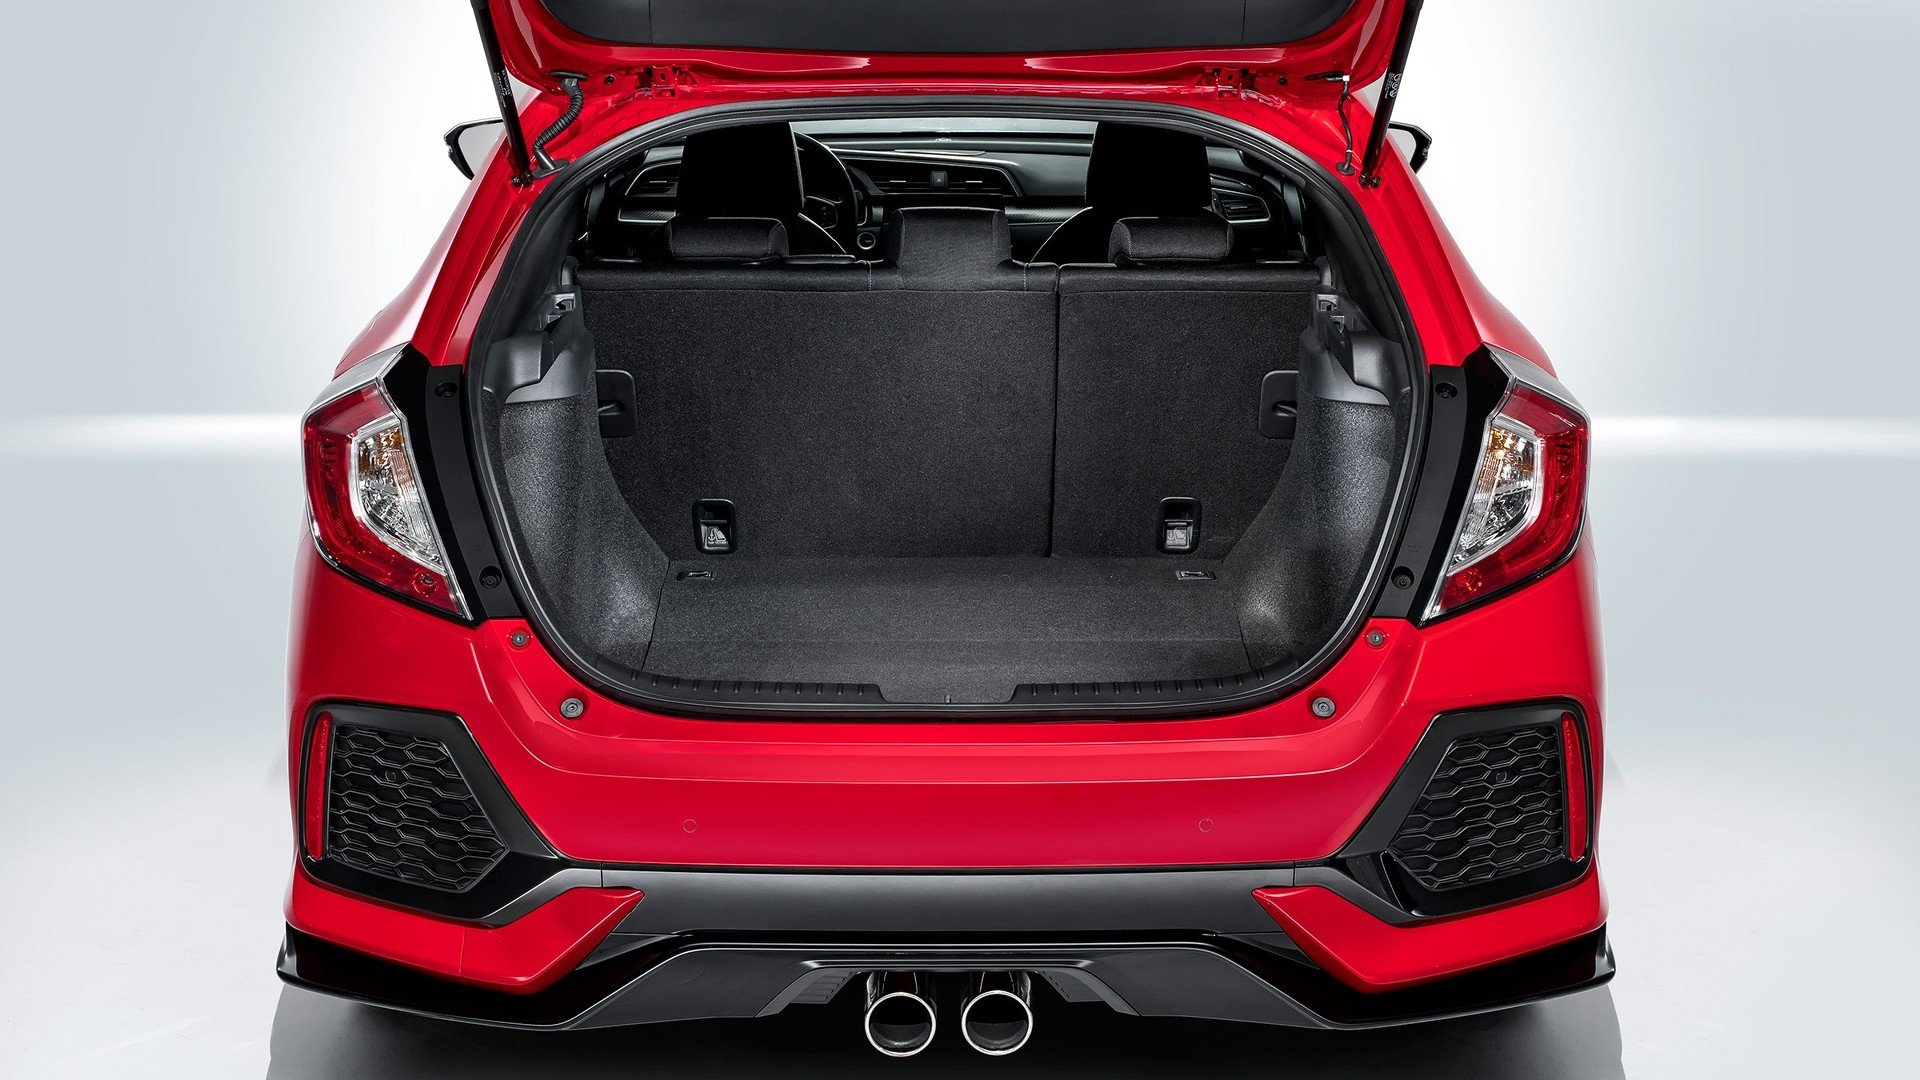 Honda Civic 2017 interior